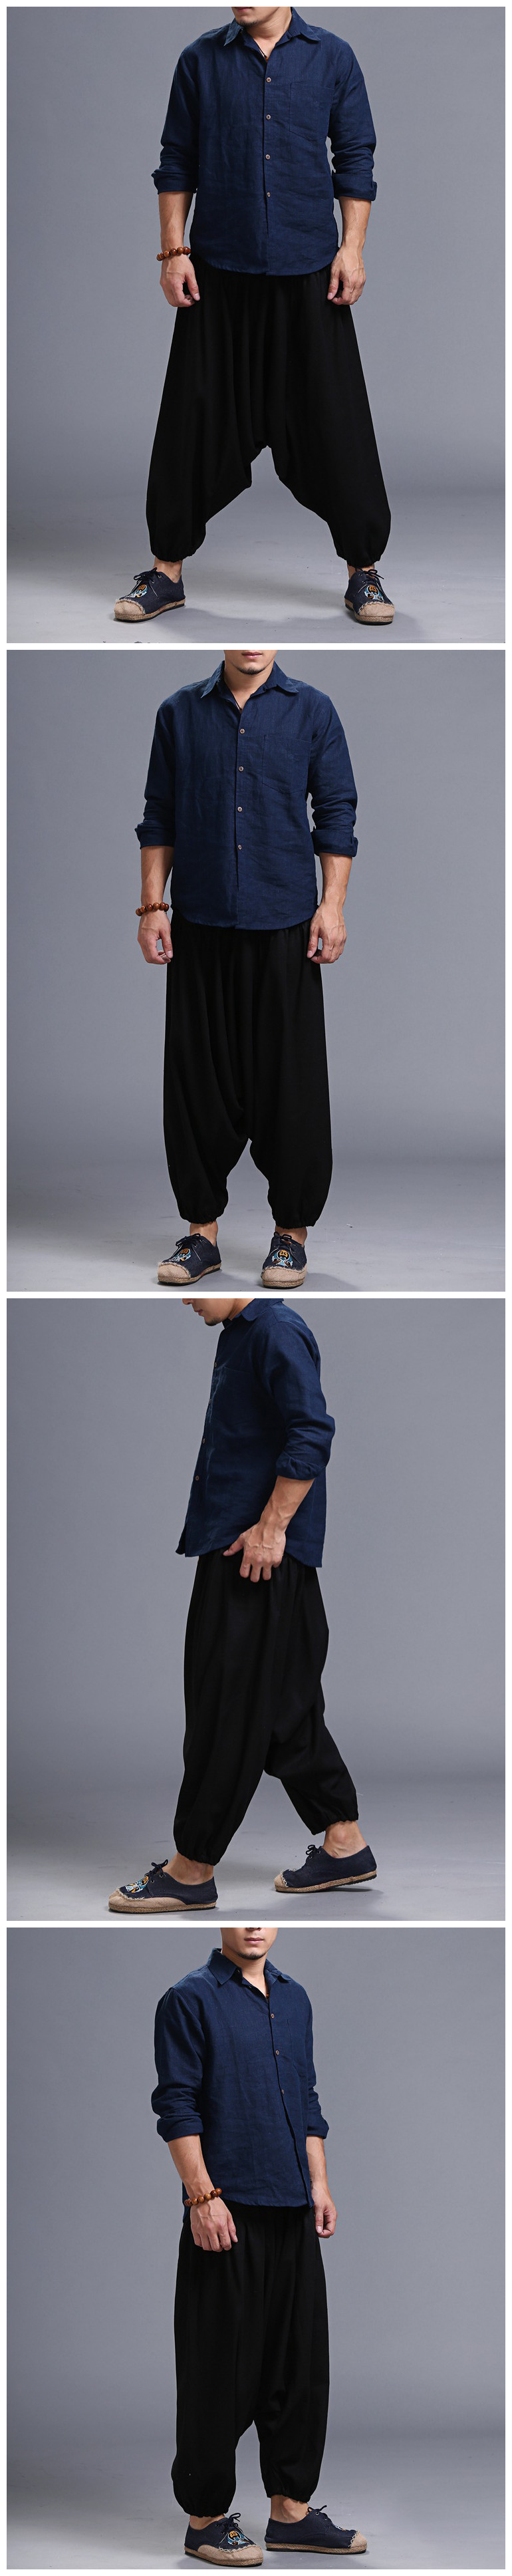 Men-Yoga-Loose-Drop-Crotch-Pants-Male-Casual-Harem-Pants-Elastic-Cotton-Linen-Bloomers-Trousers-1079733-1